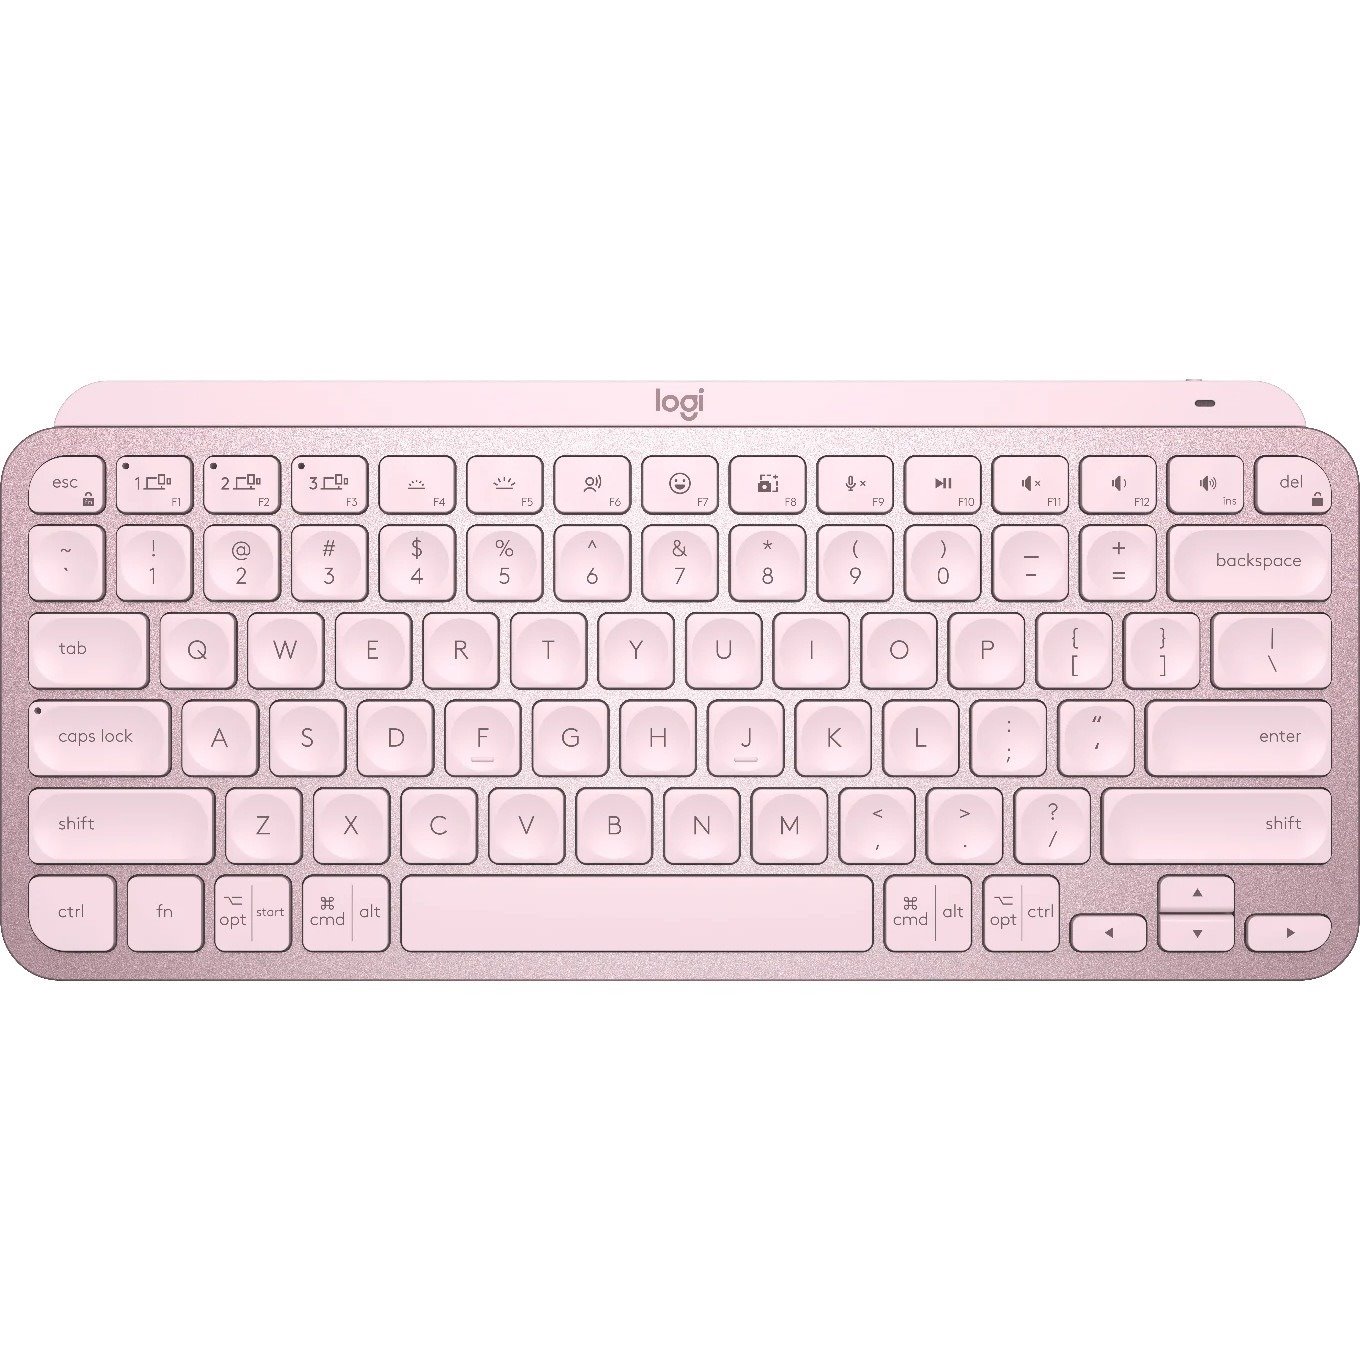 Logitech MX Keys Mini Keyboard - Wireless Connectivity - Rose